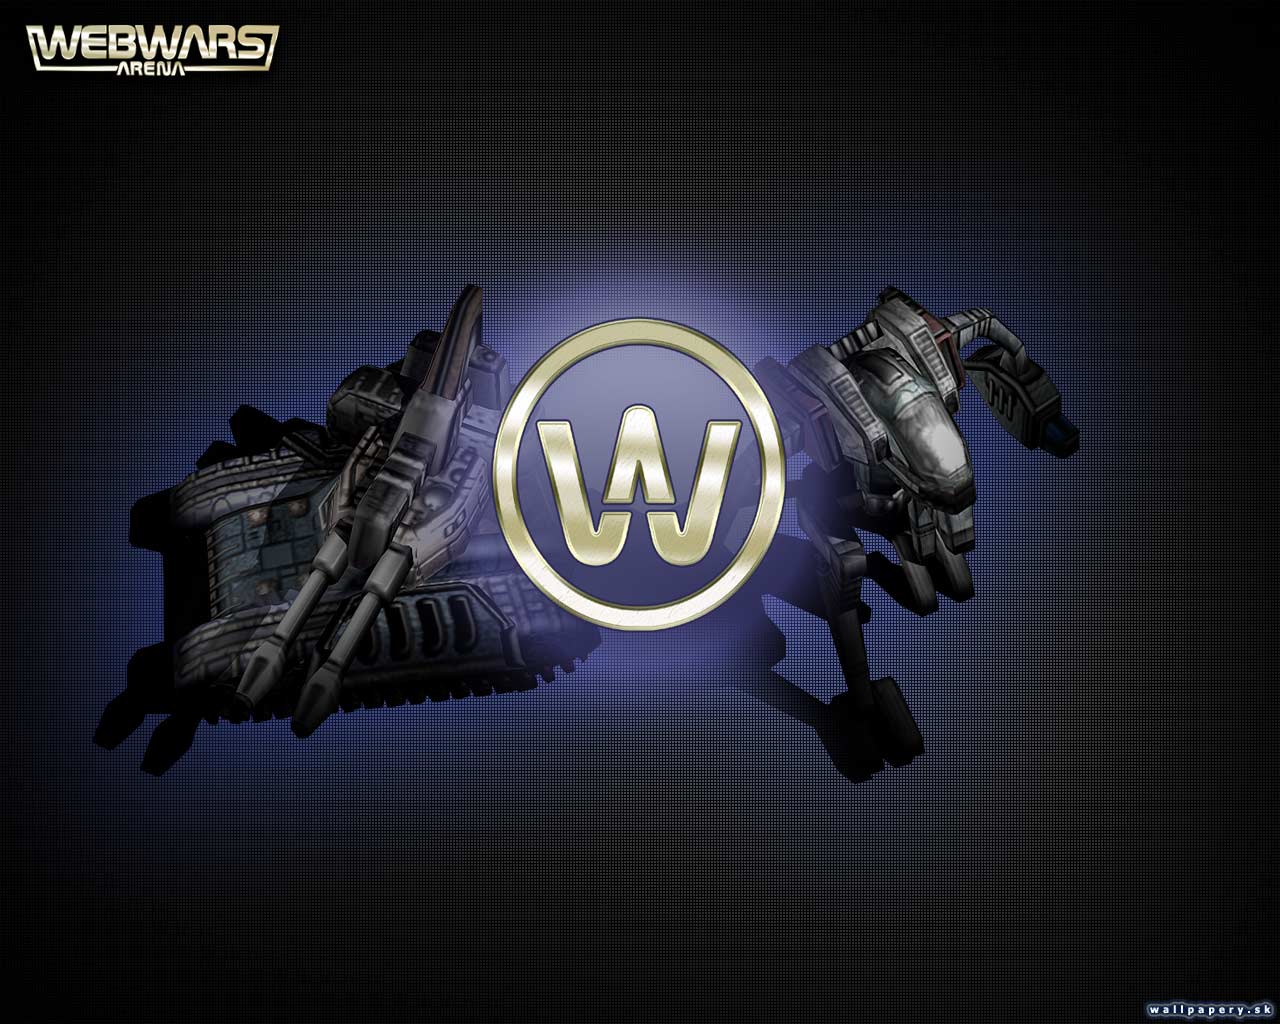 Arena Wars - wallpaper 2